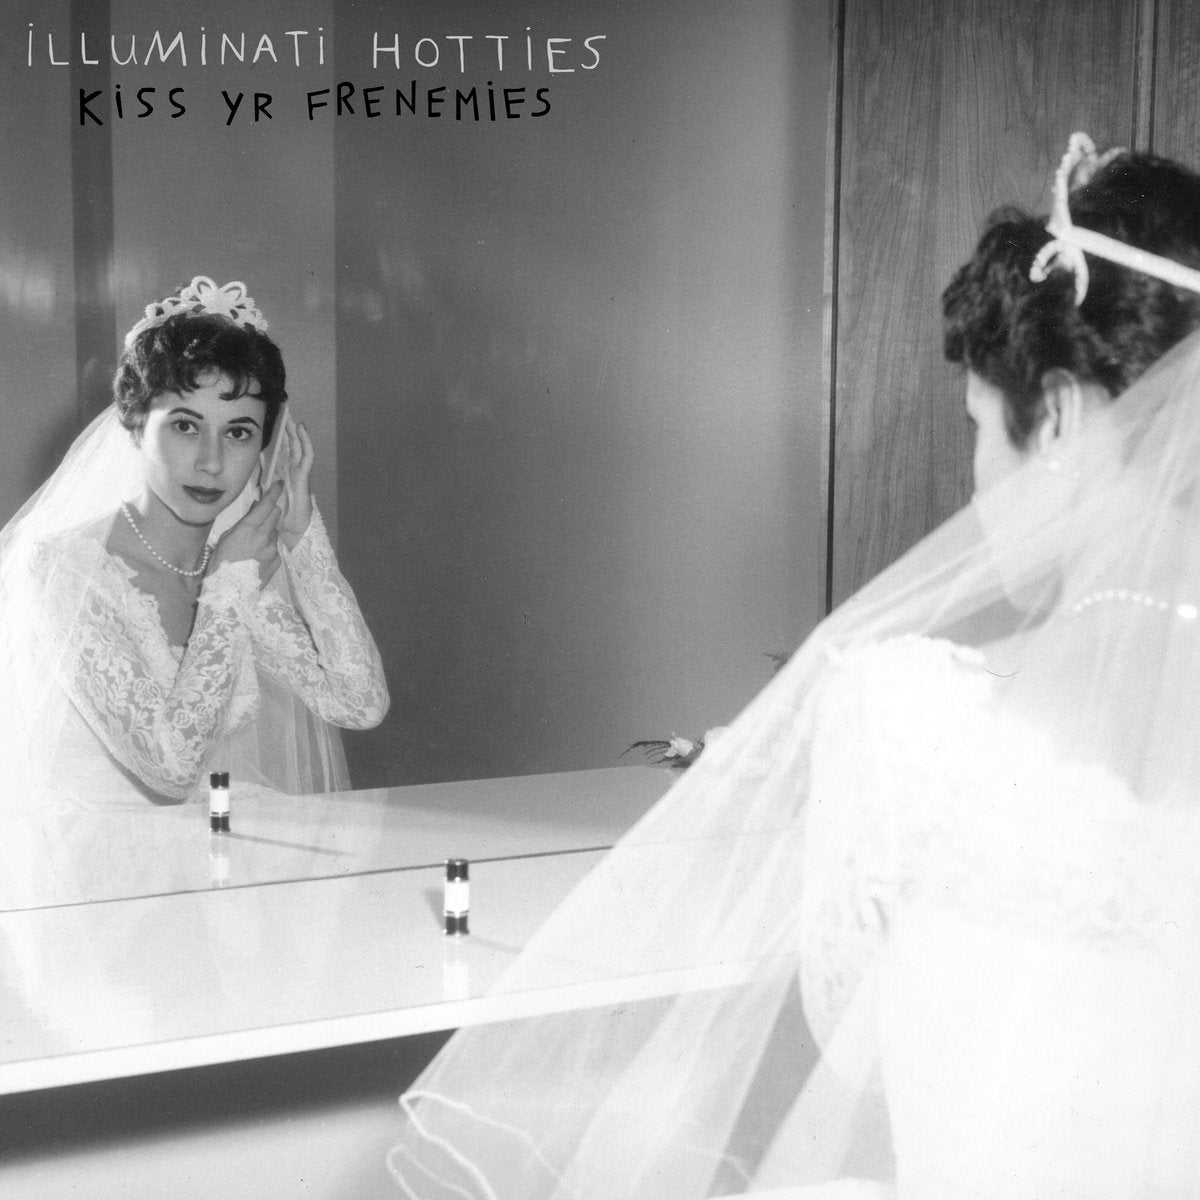 ILLUMINATI HOTTIES - KISS YR FRENEMIES Vinyl LP